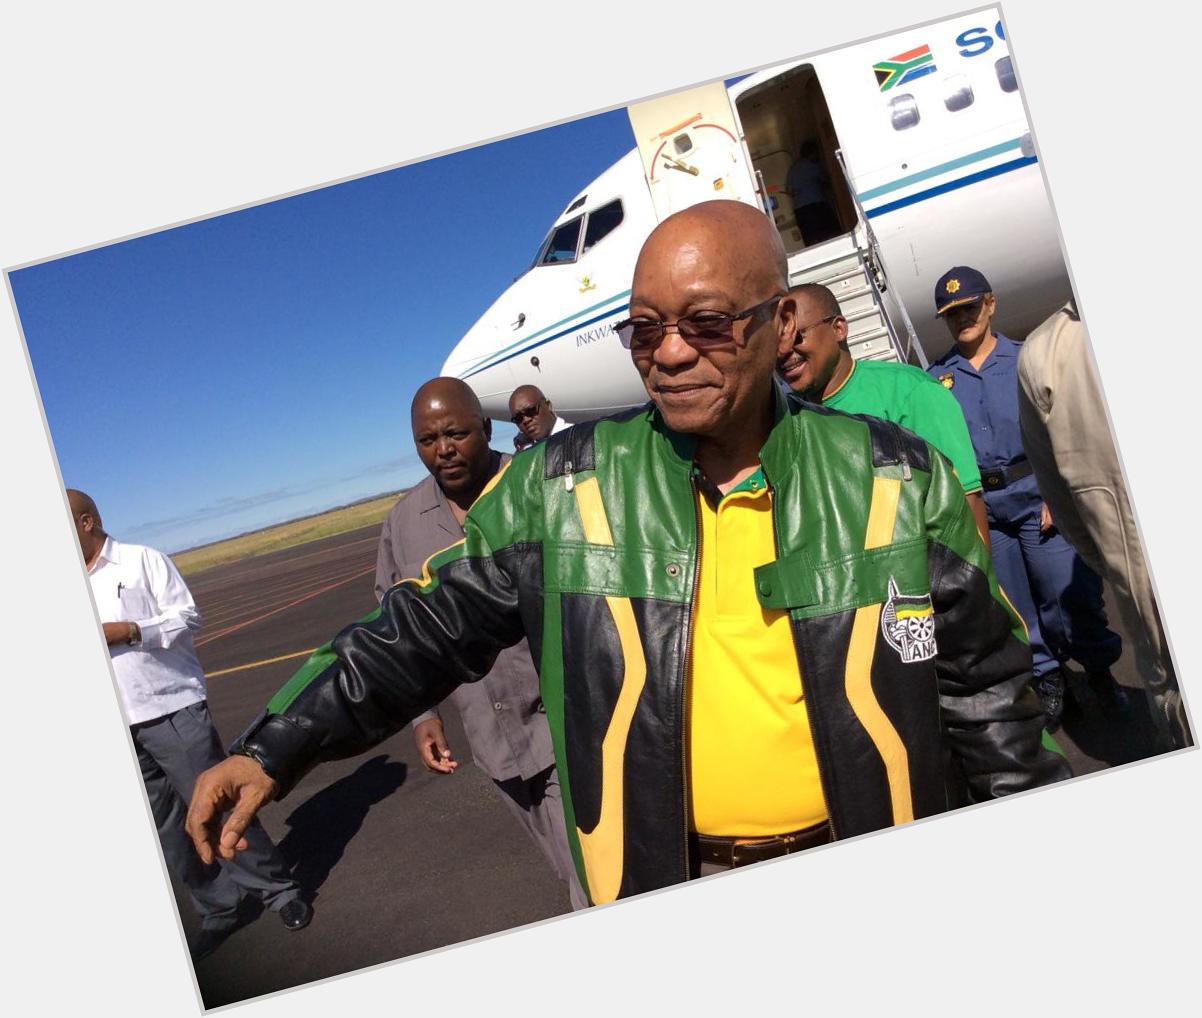 HBD Msholozi wishes President Jacob Zuma a happy 73rd birthday today, 12 April. Khula Msholozi 